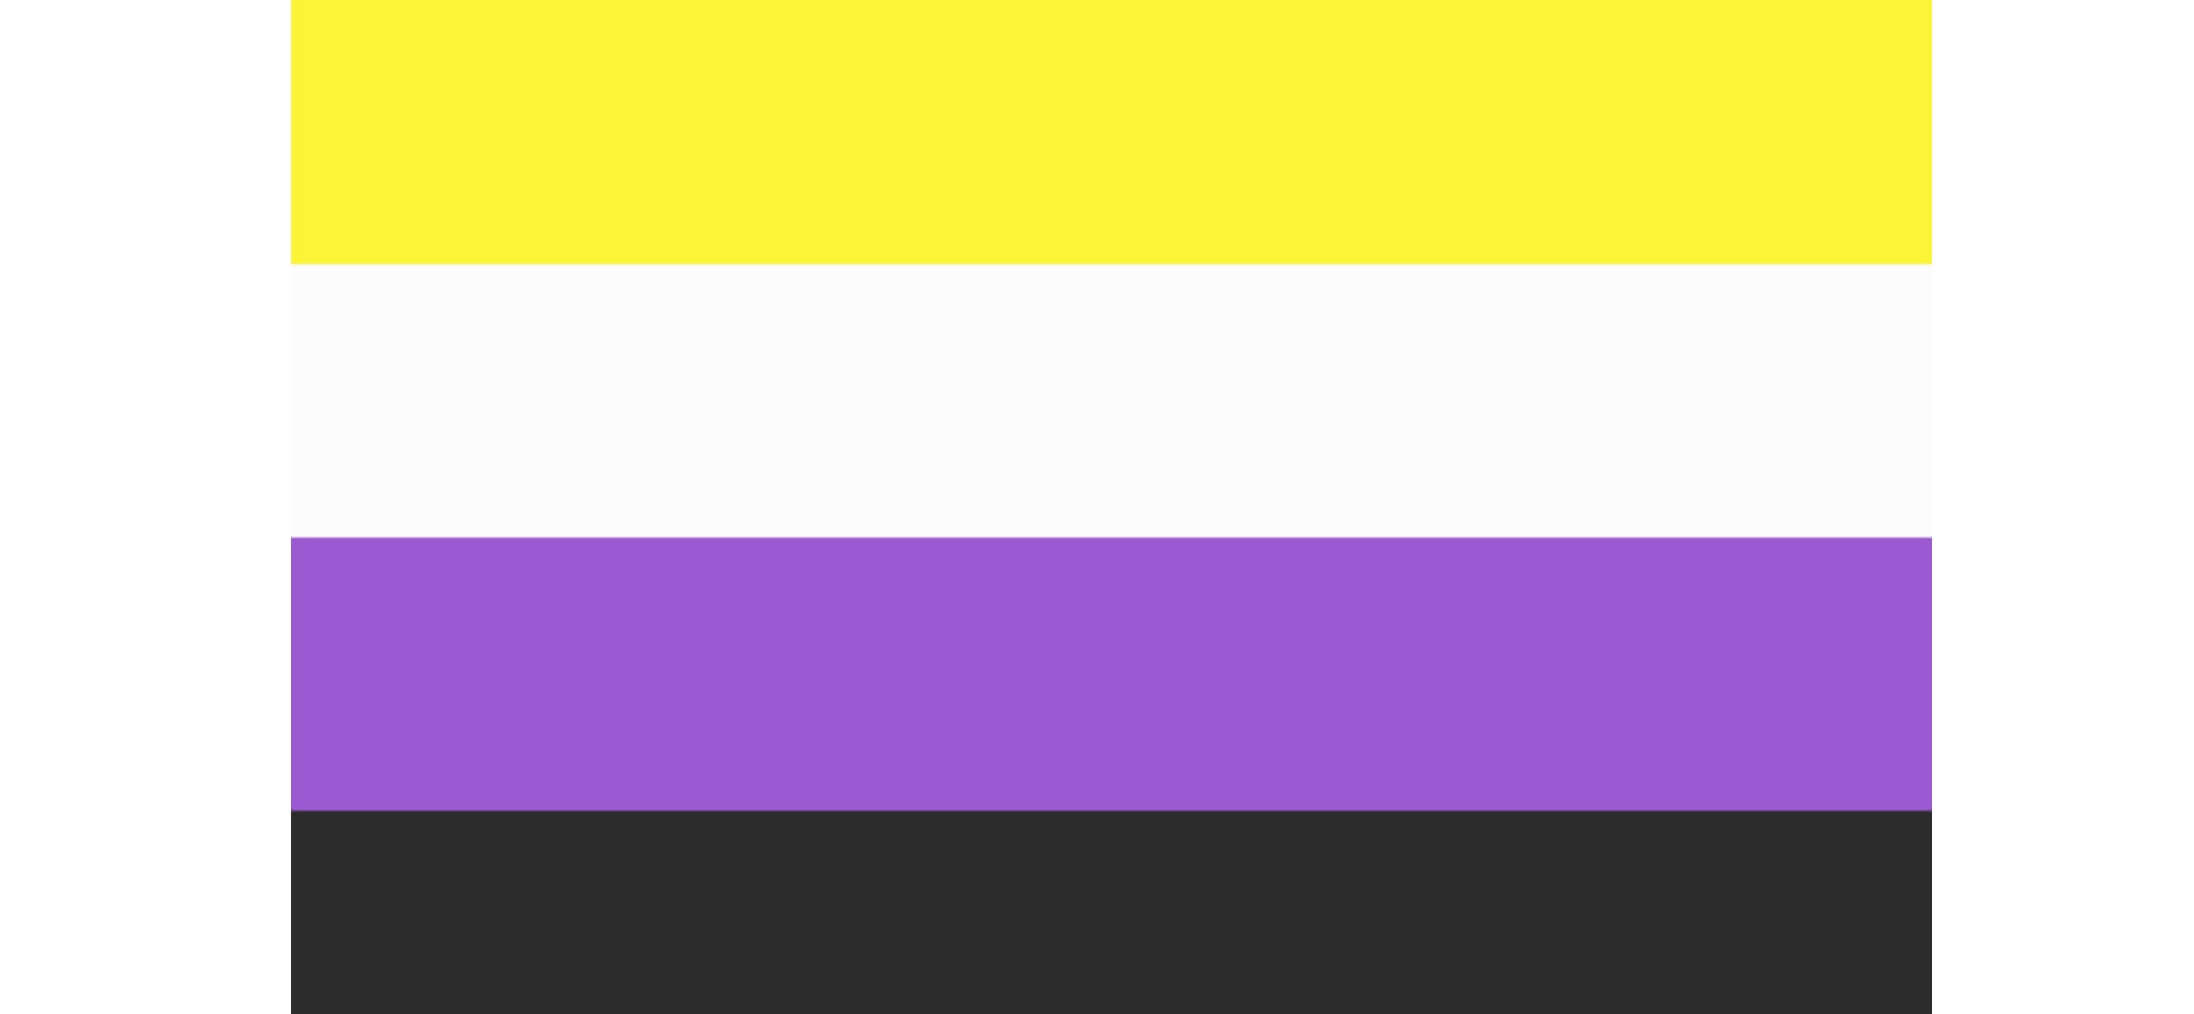 Horizontal yellow, white, purple, and black stripes